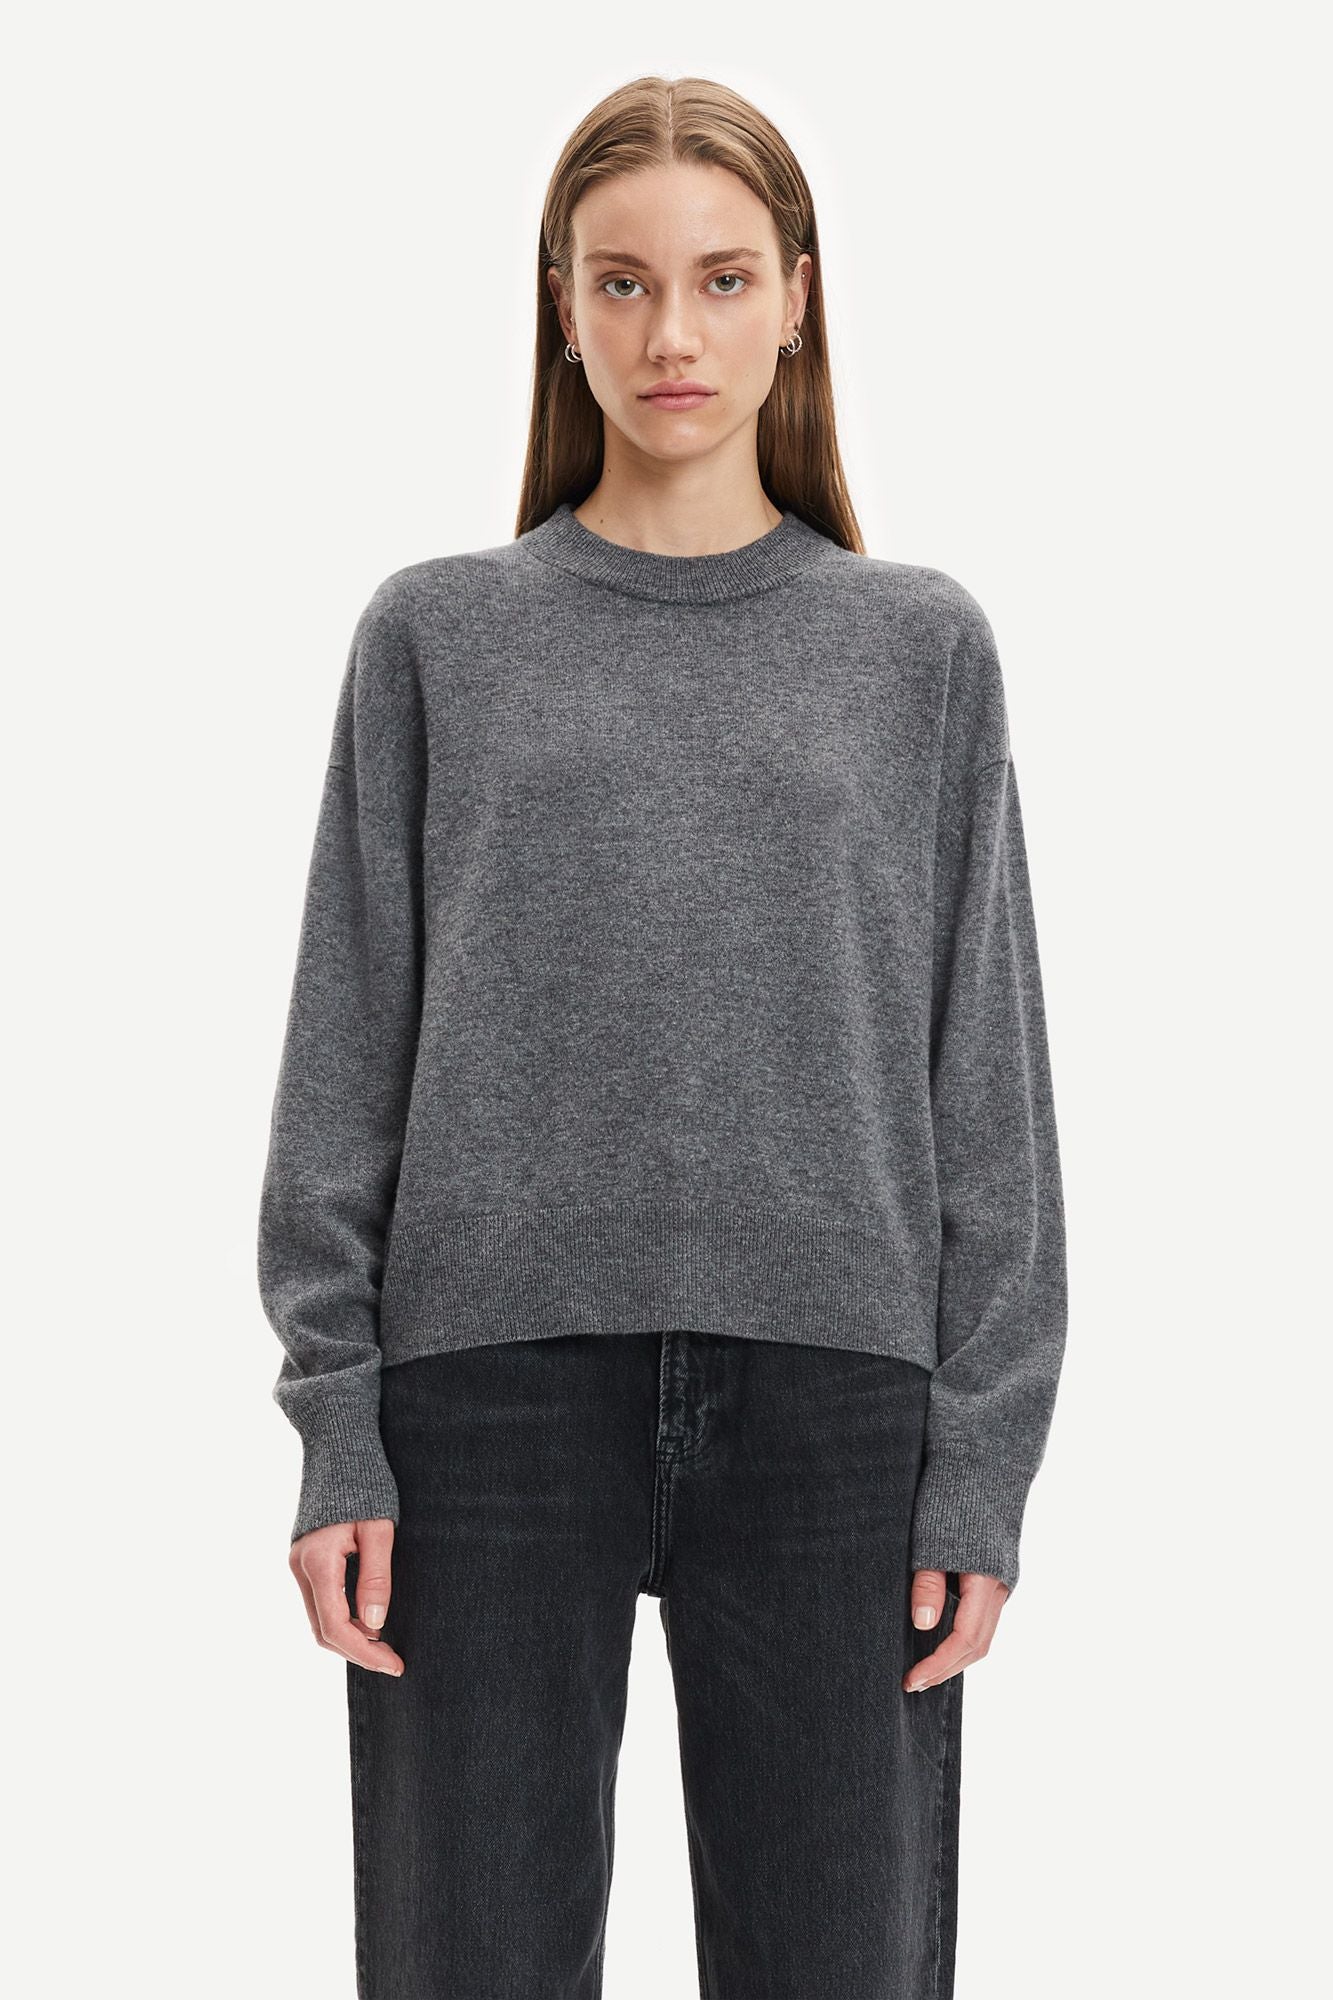 Amaris oversized wool sweater in dark grey